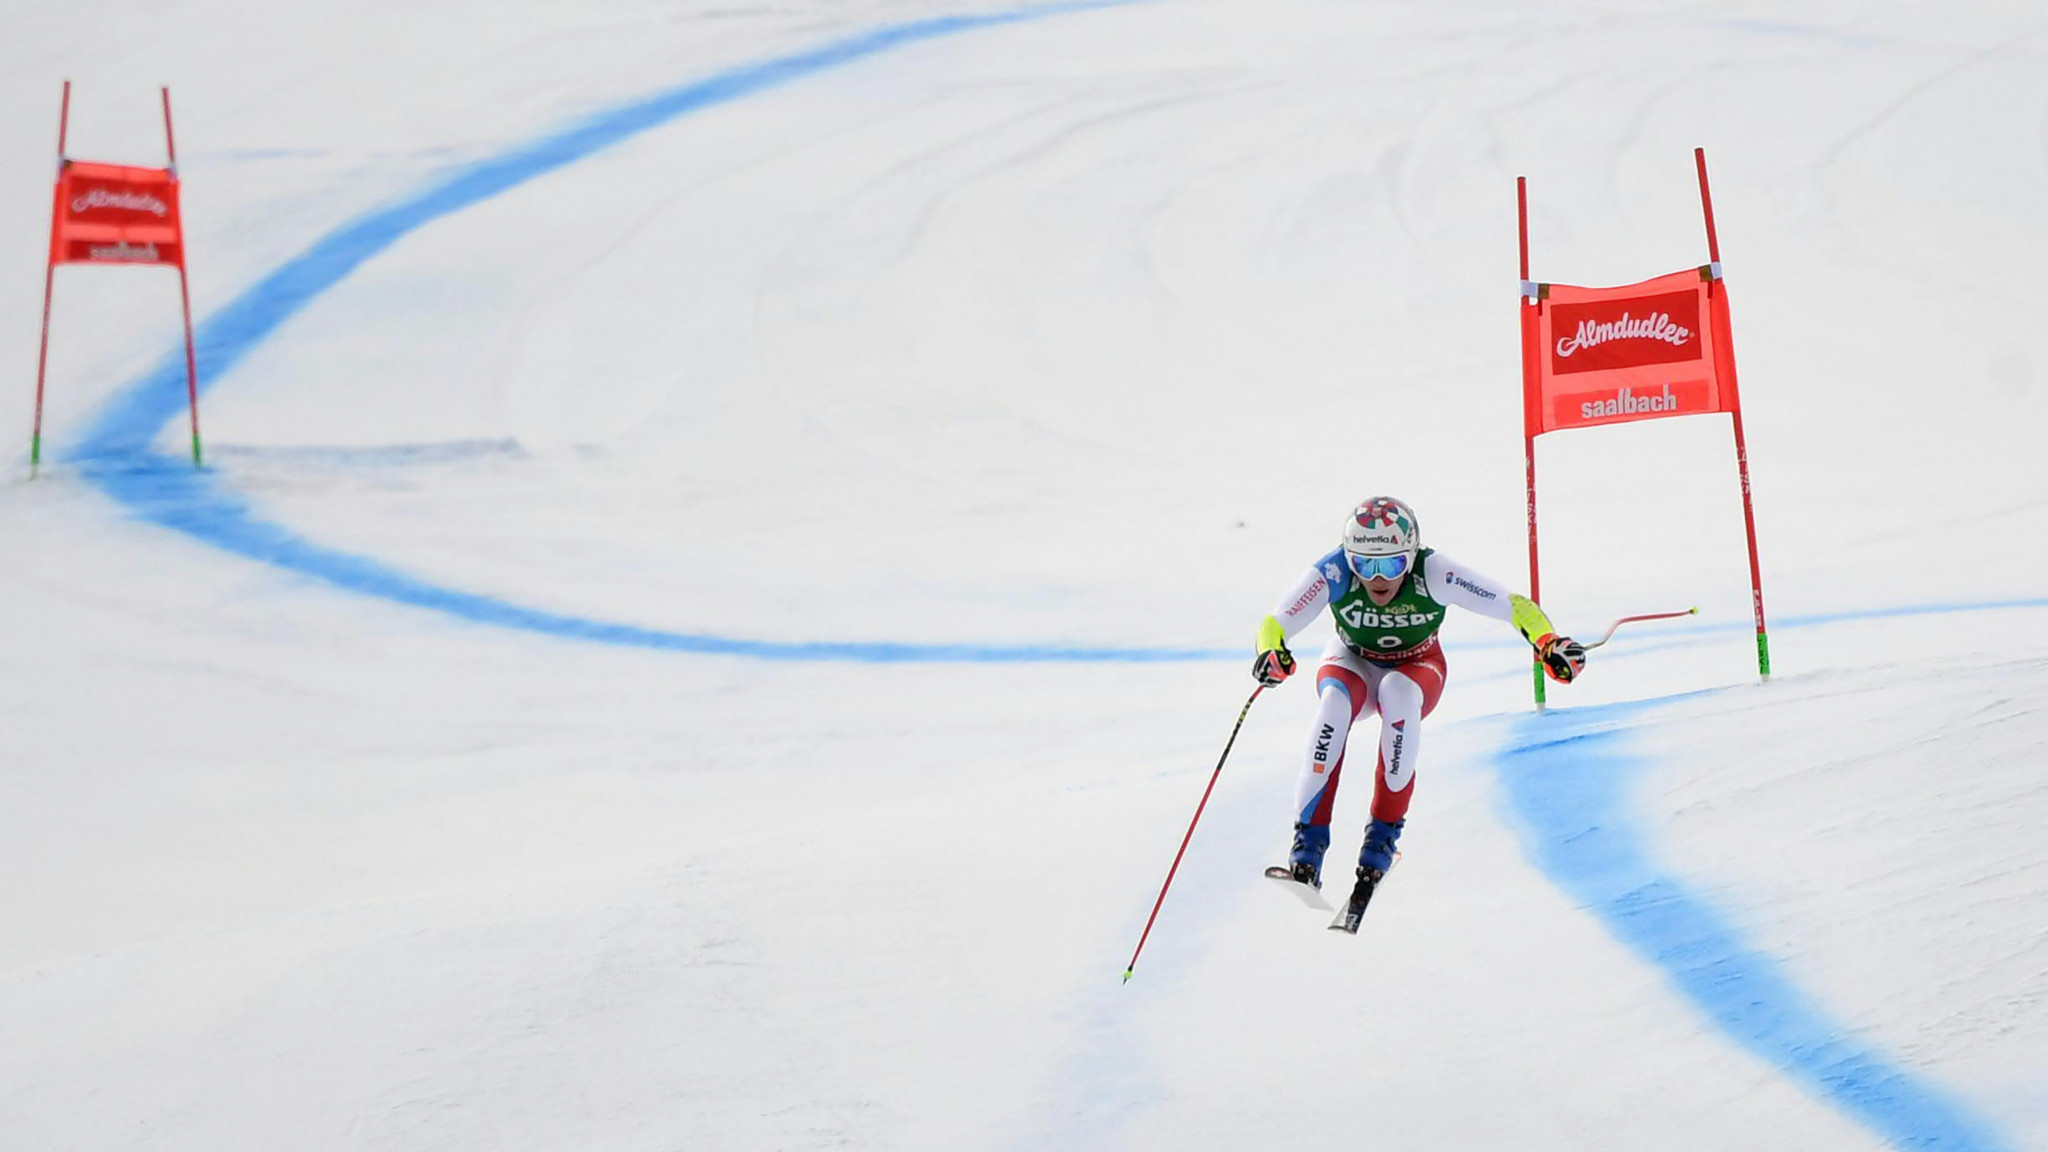 Alpine Skiing: Marco Odermatt, FIS Alpine Skiing World Cup, Super-G in Saalbach, Cyclic winter sports. 2050x1160 HD Wallpaper.